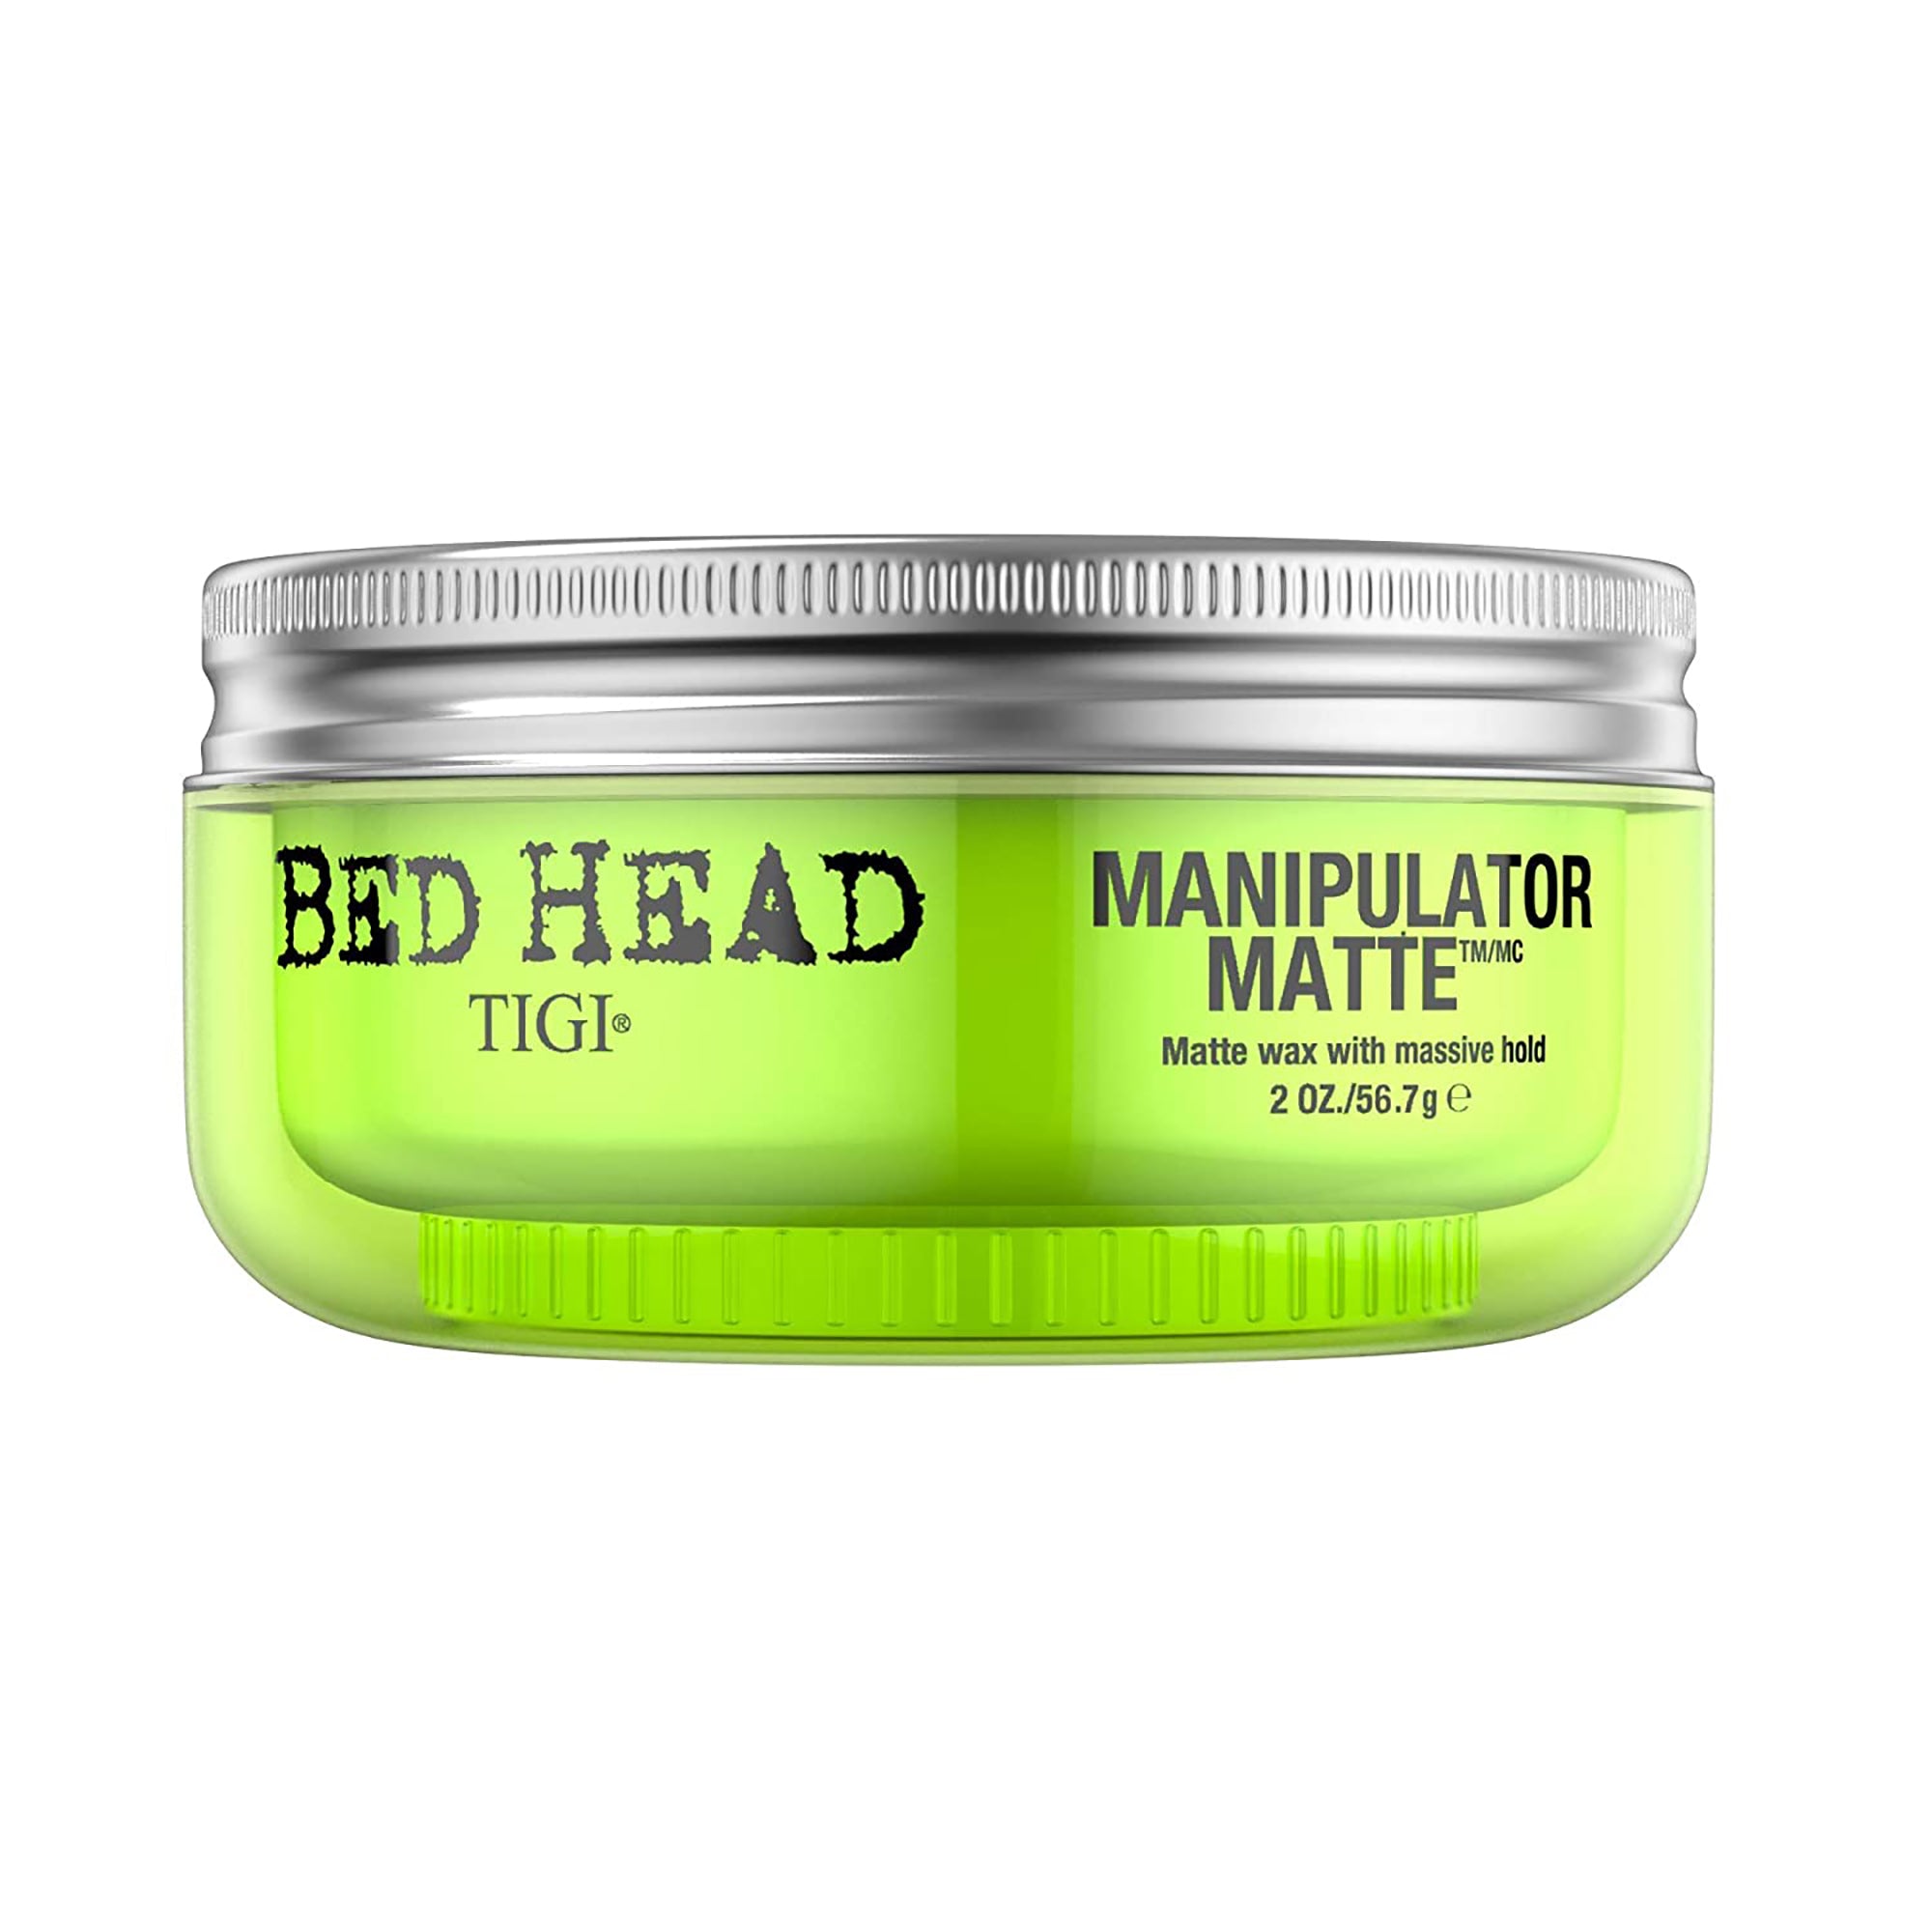 TIGI Bed Head Manipulator Matte / 2.OZ